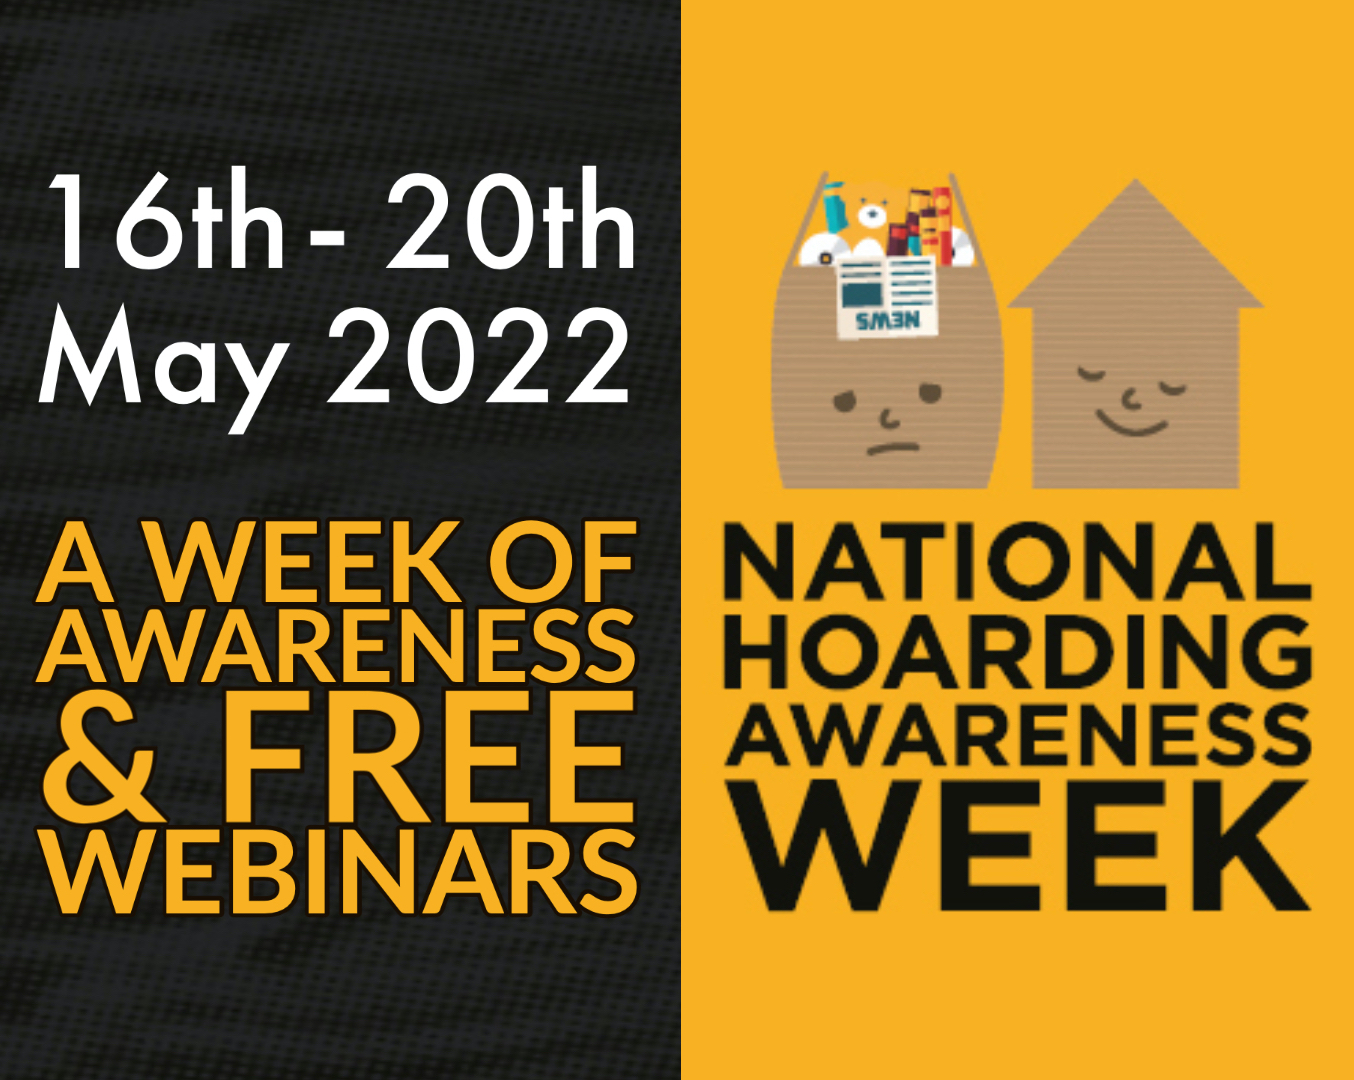 National Hoarding Awareness Week 2022